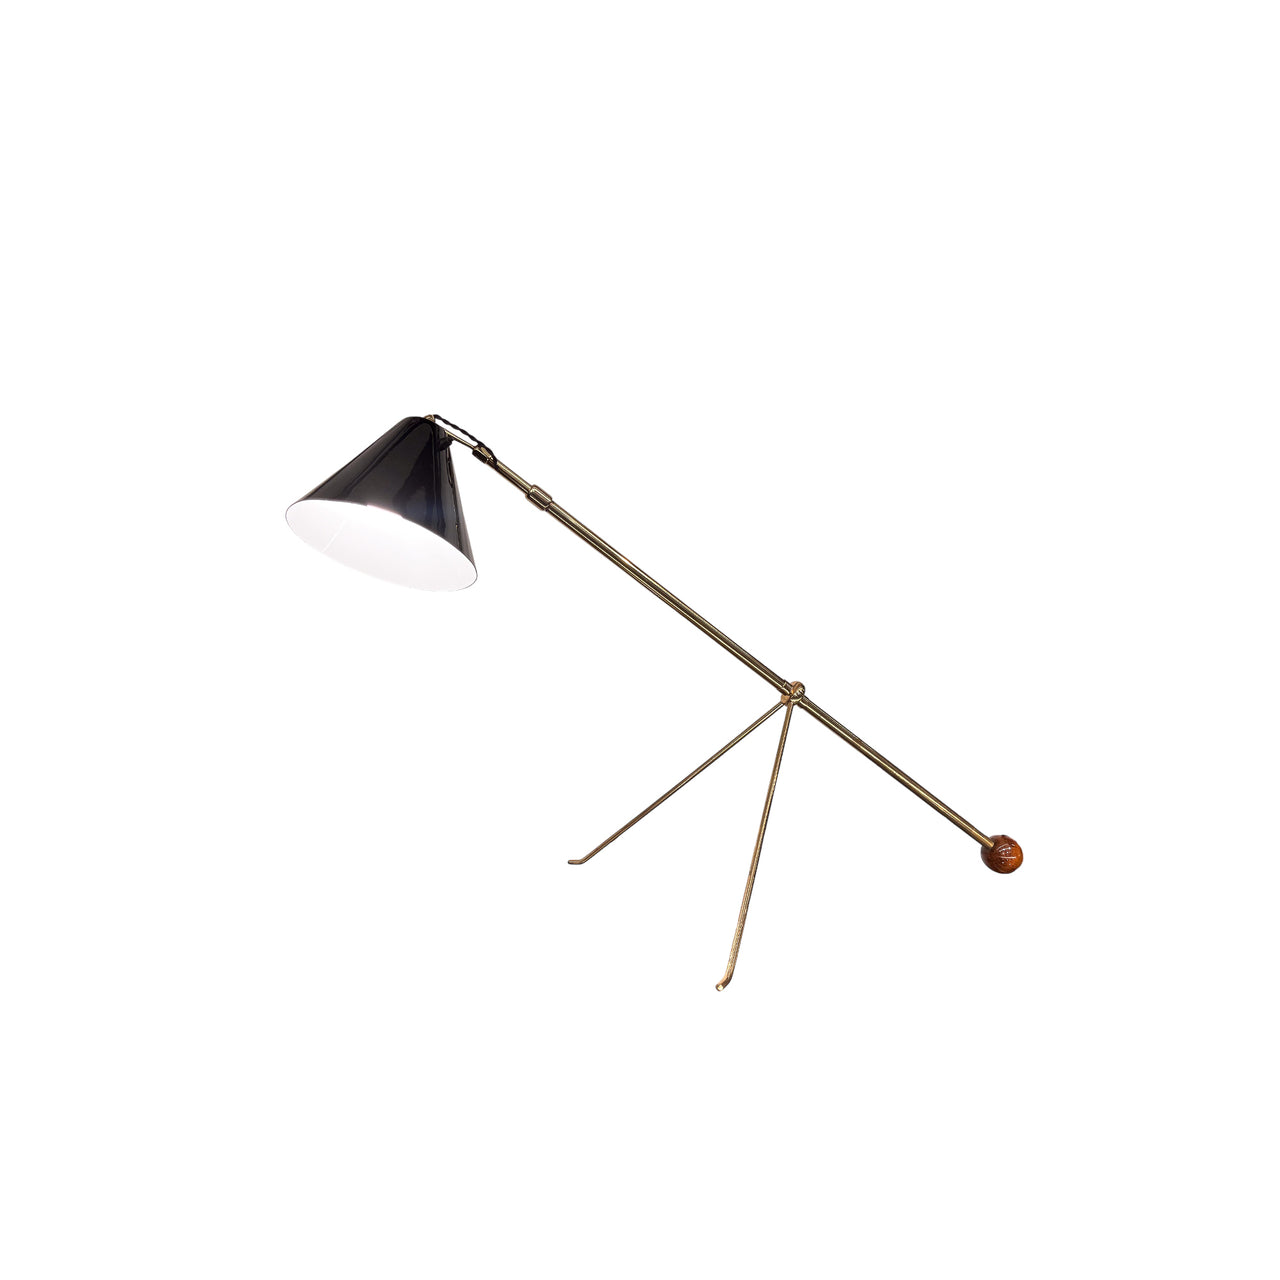 Adjustable Floor Lamp in Brass & Wood Detail, Unknown, c. 1960- Lot 475